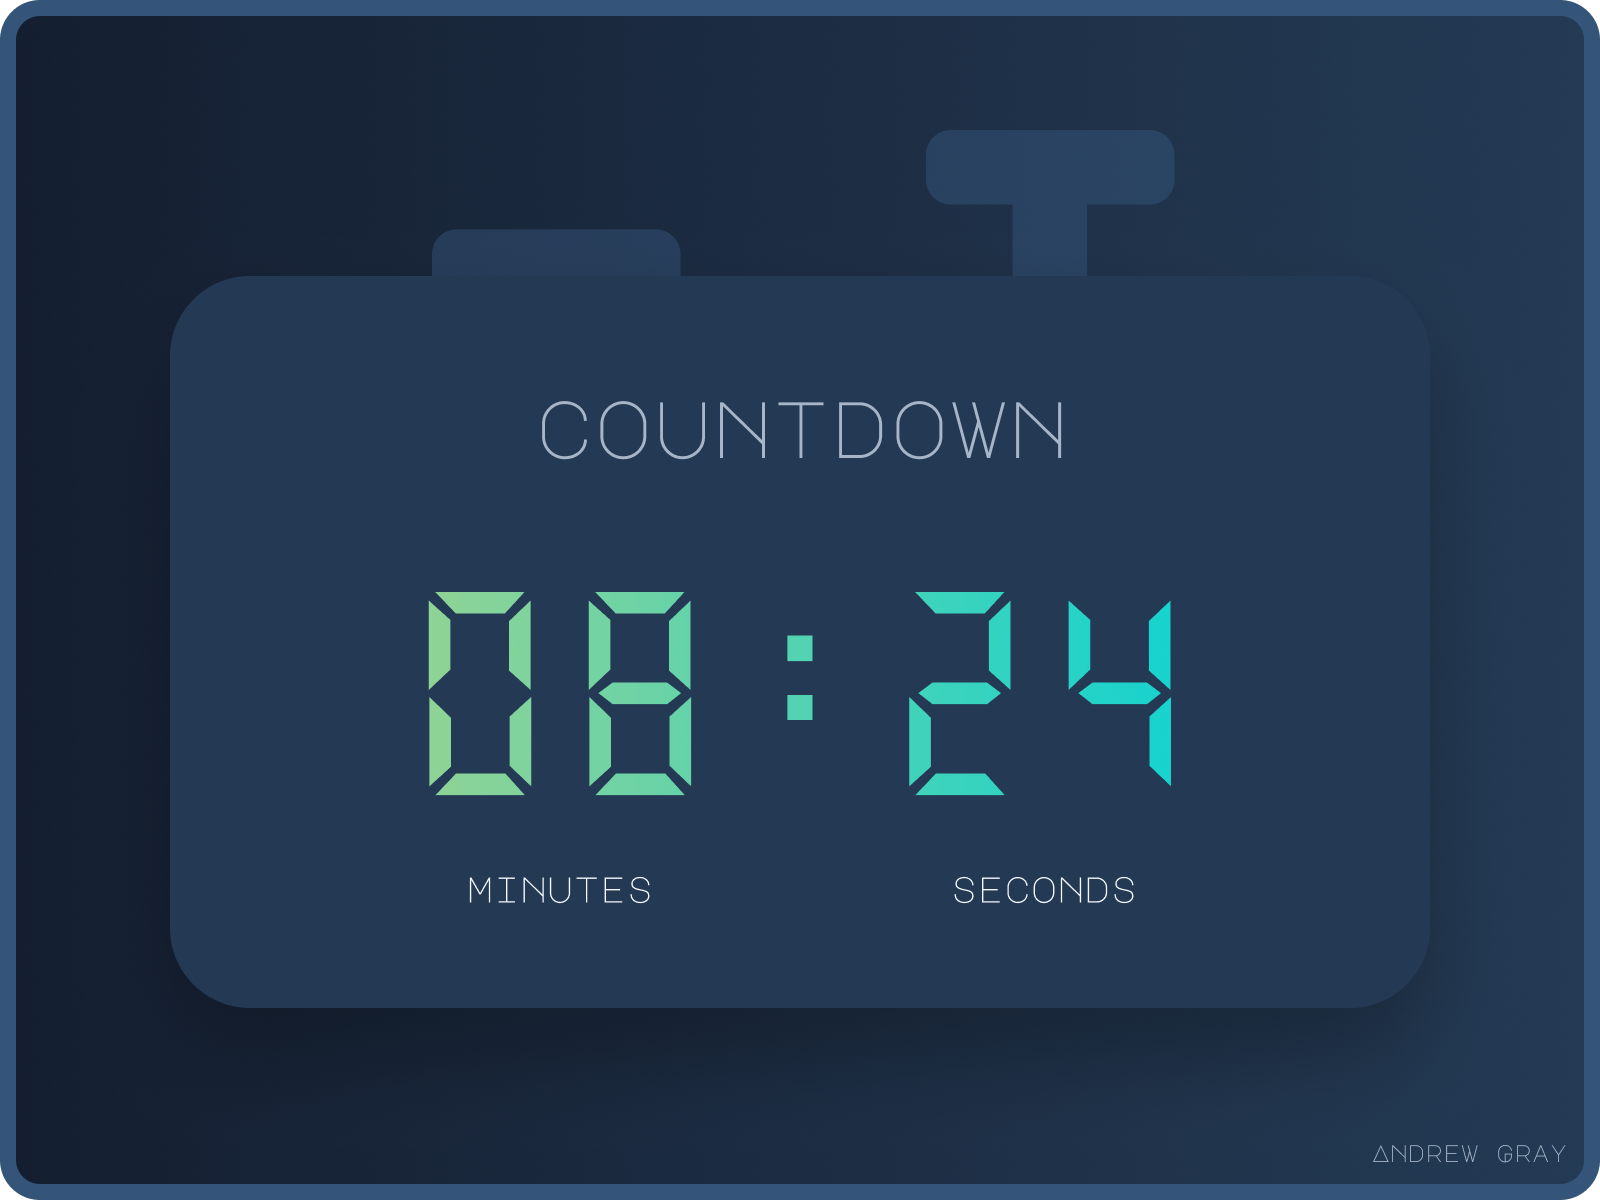 aimilar digital countdown days timer instructions